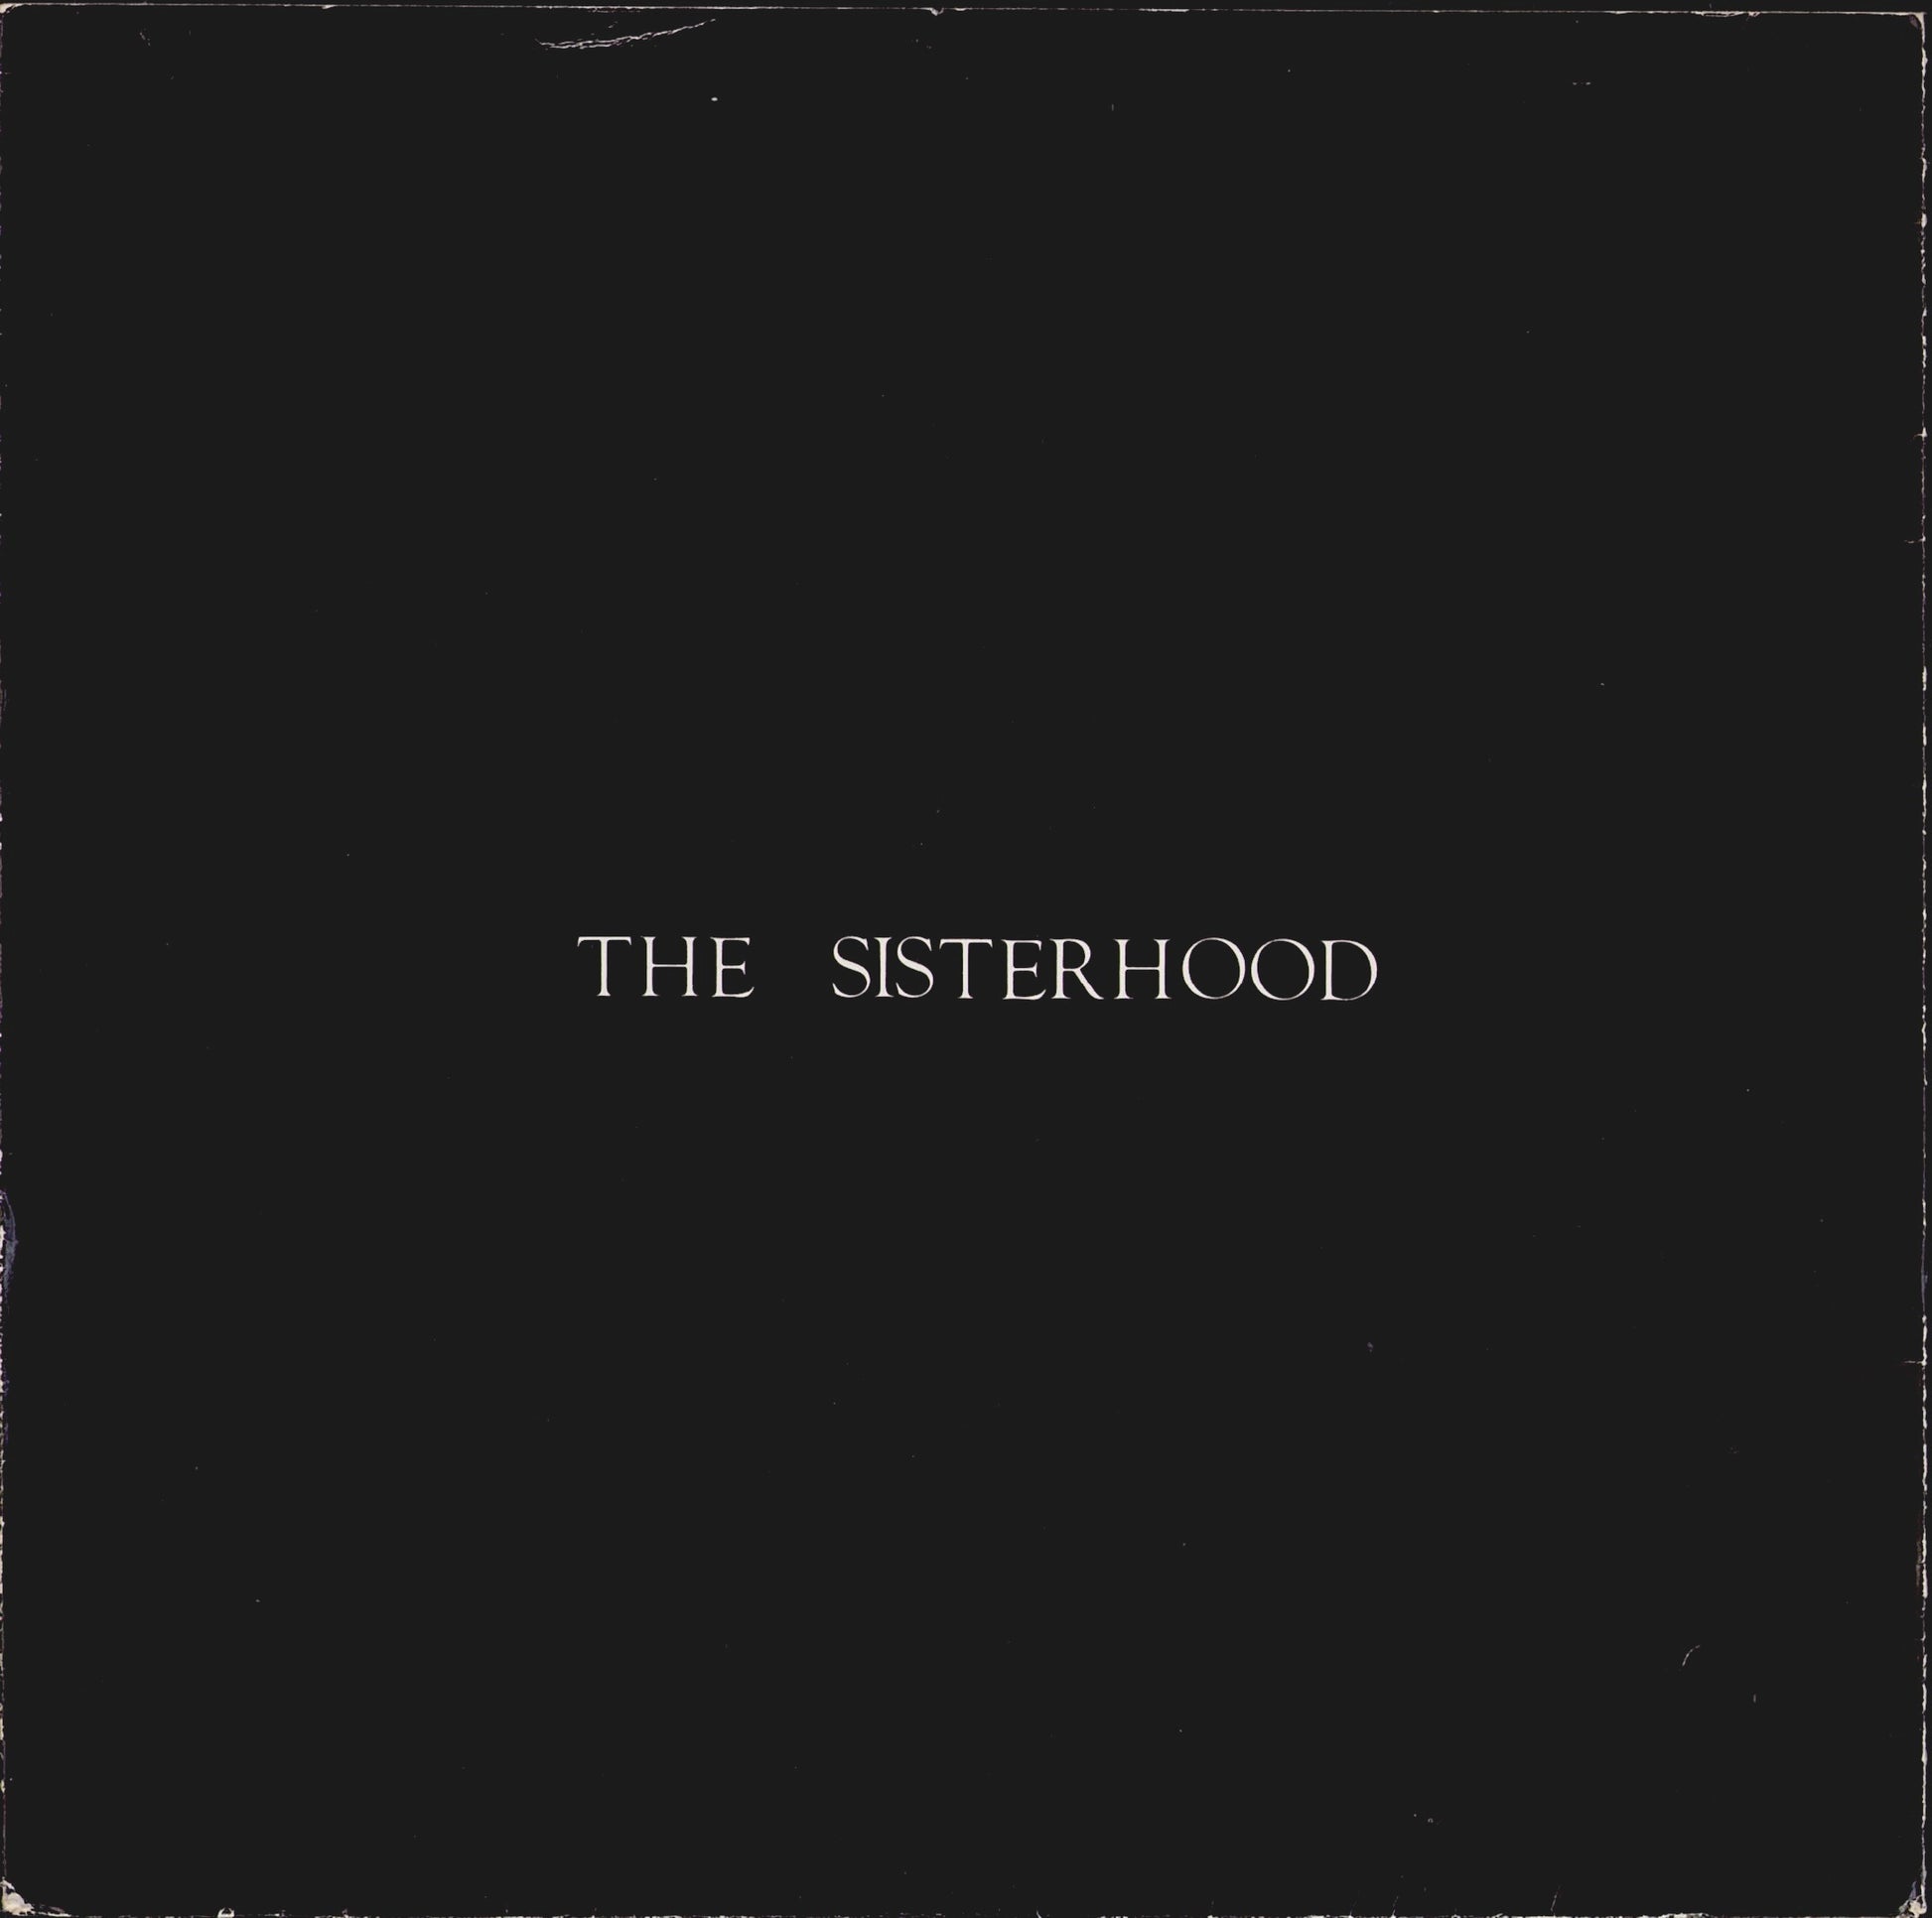 The Sisterhood - Giving Ground Vinyl 7"